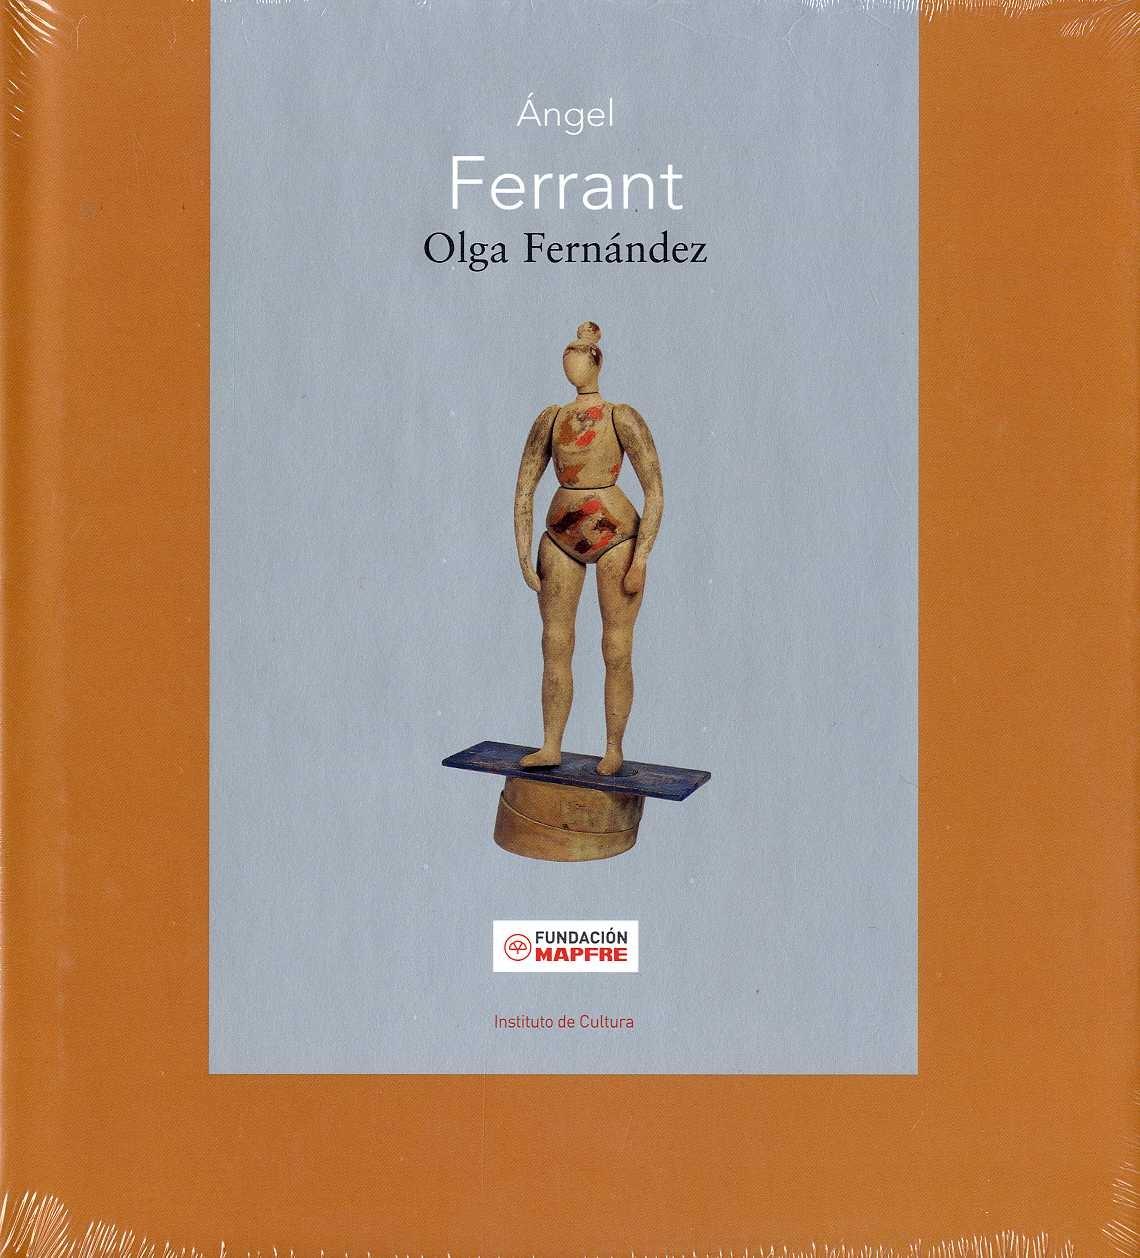 Angel Ferrant. 